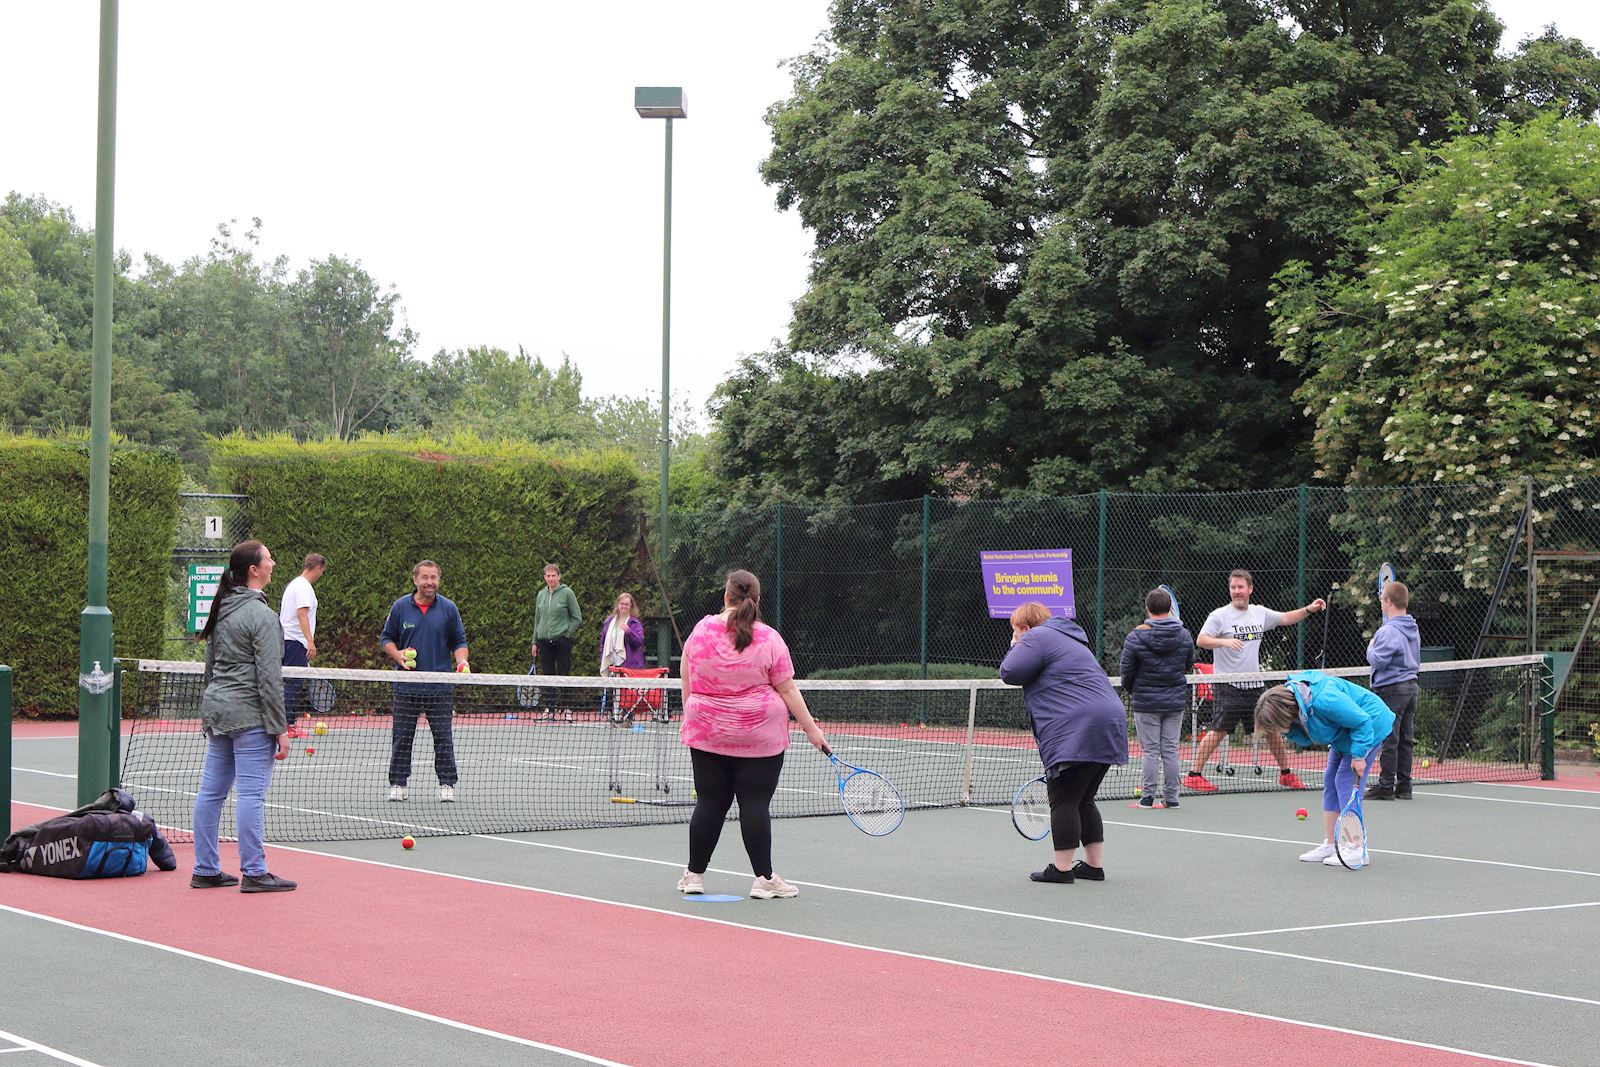 Players at Market Harborough Lawn Tennis Club